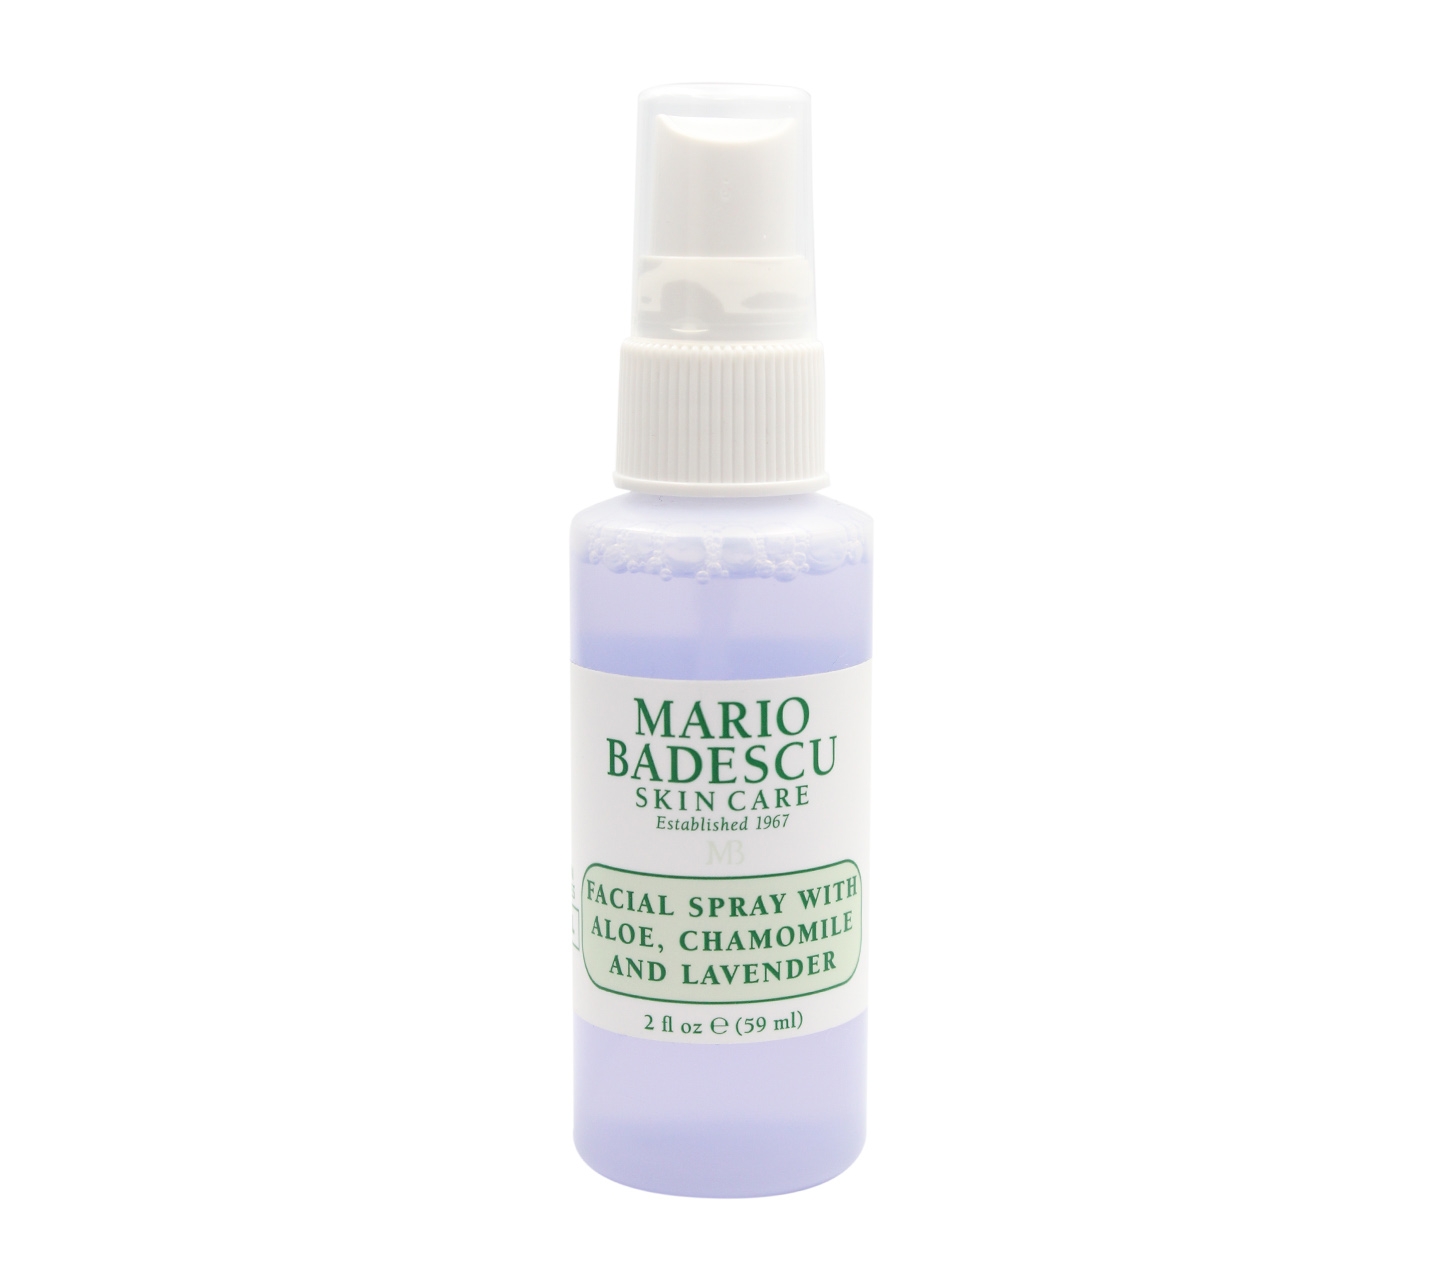 Mario Badescu Facial Spray with Aloe, Chamomile and Lavender Skin Care